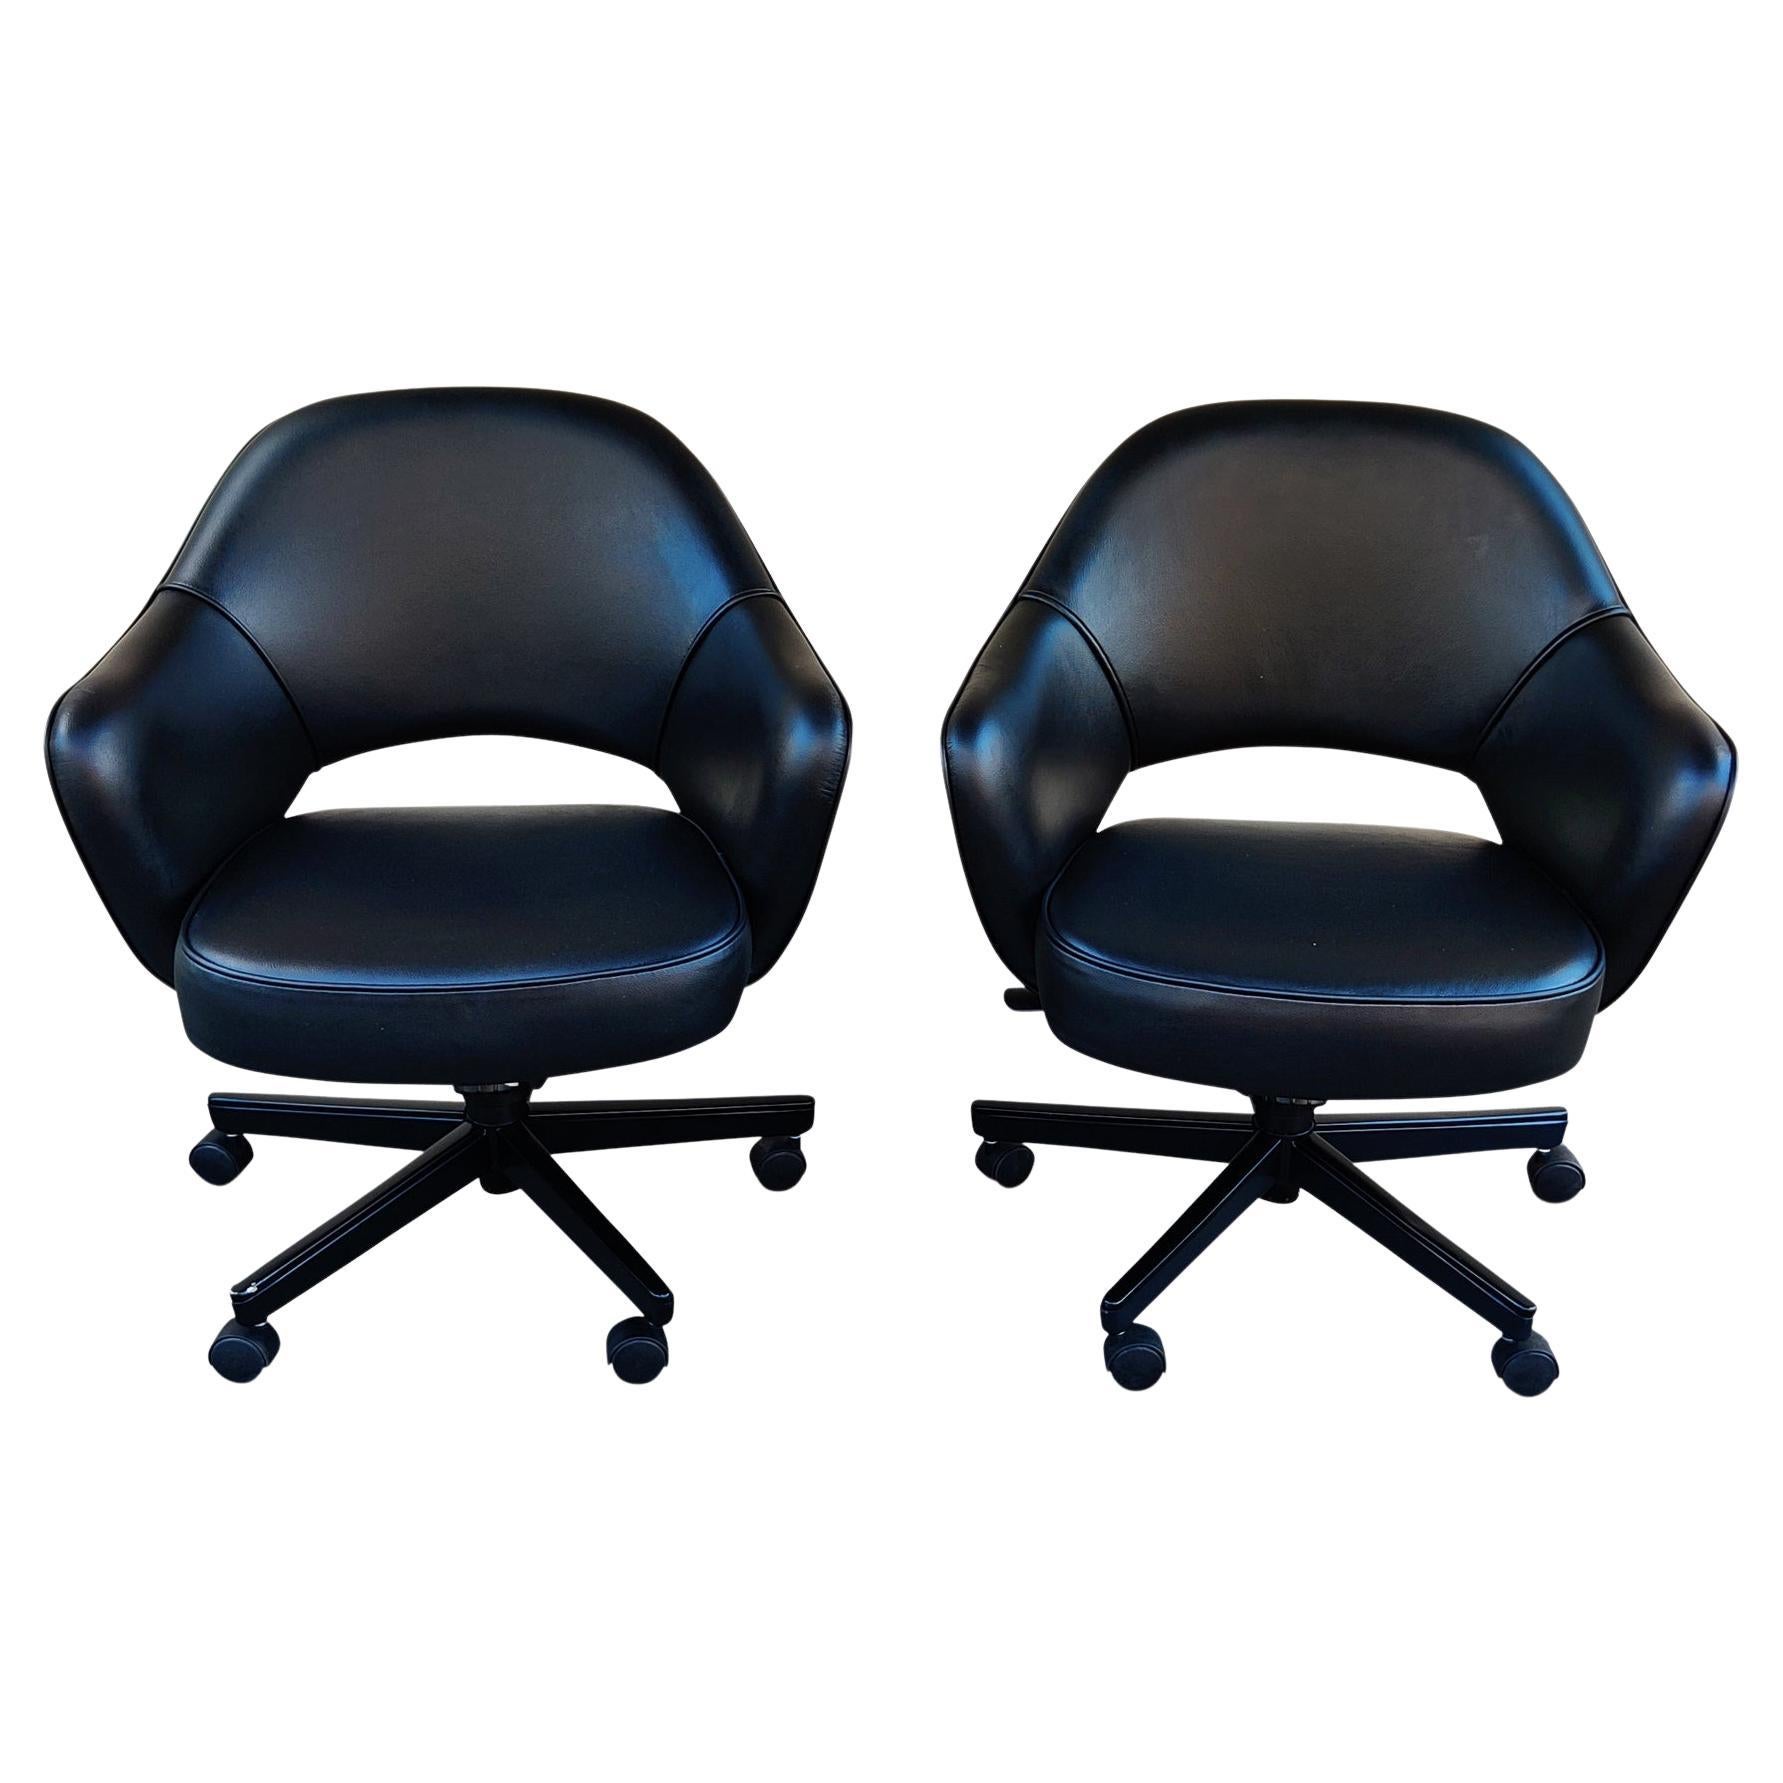 Pair Saarinen Knoll Executive Chairs Black Leather Tilt Swivel Height Adjustable